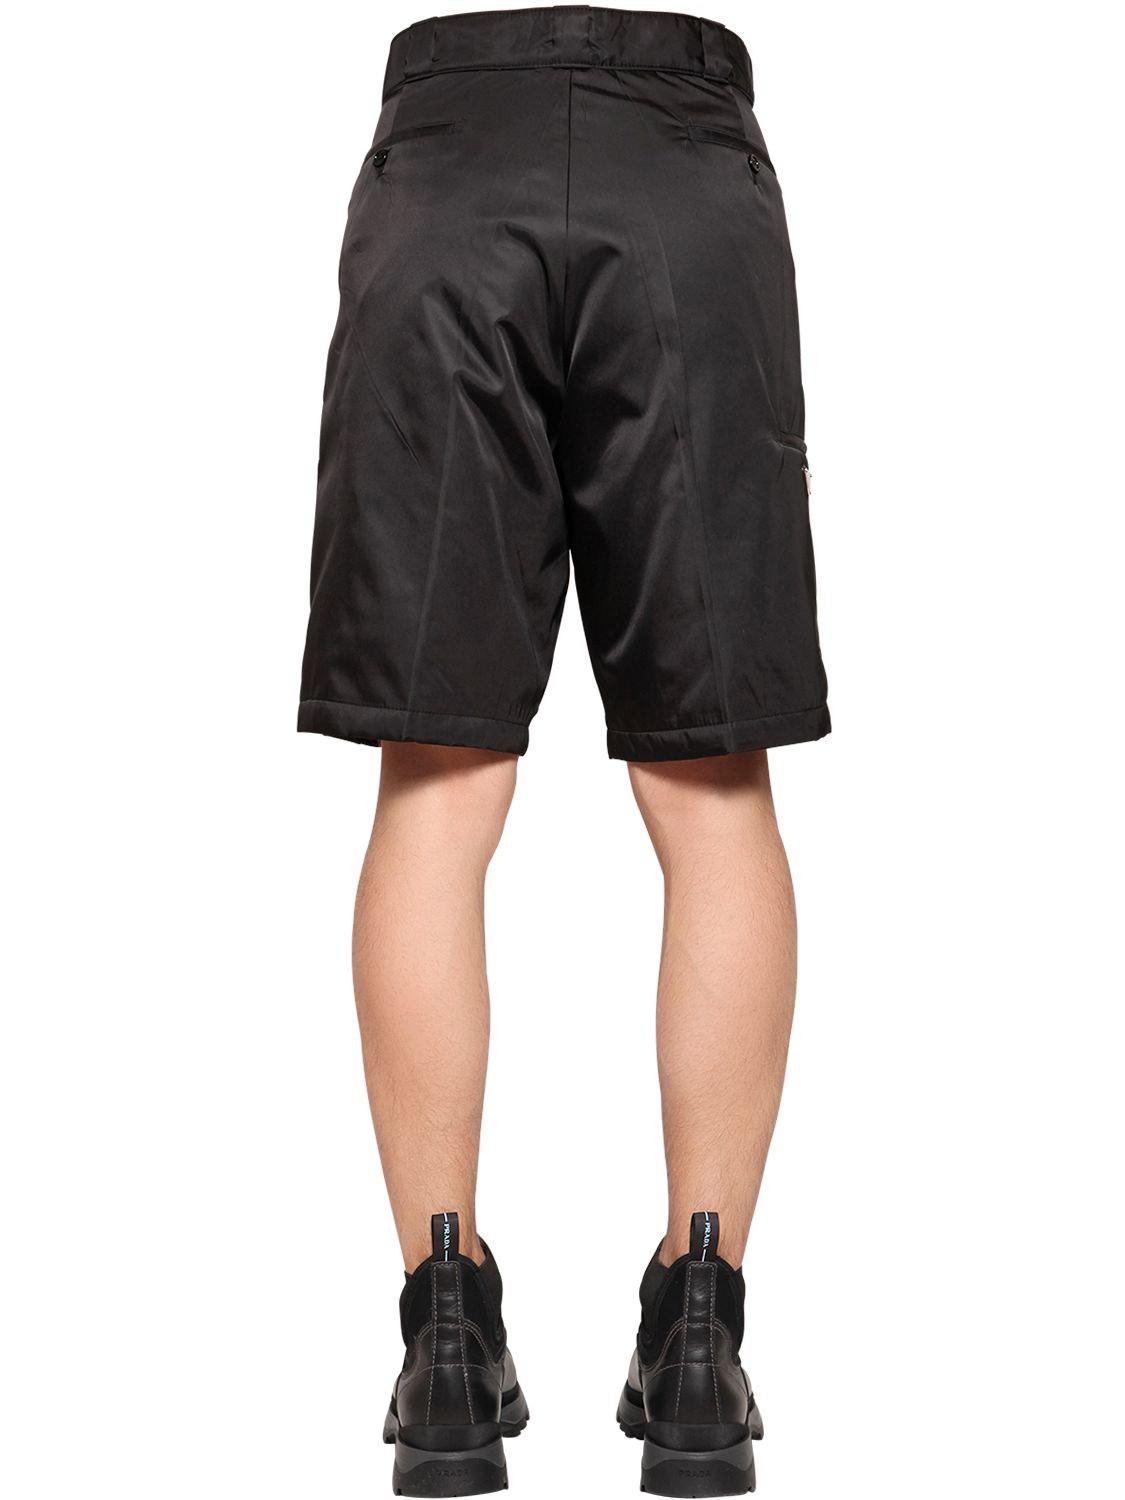 Prada Synthetic Nylon Gabardine Bermuda Shorts in Black for Men - Lyst